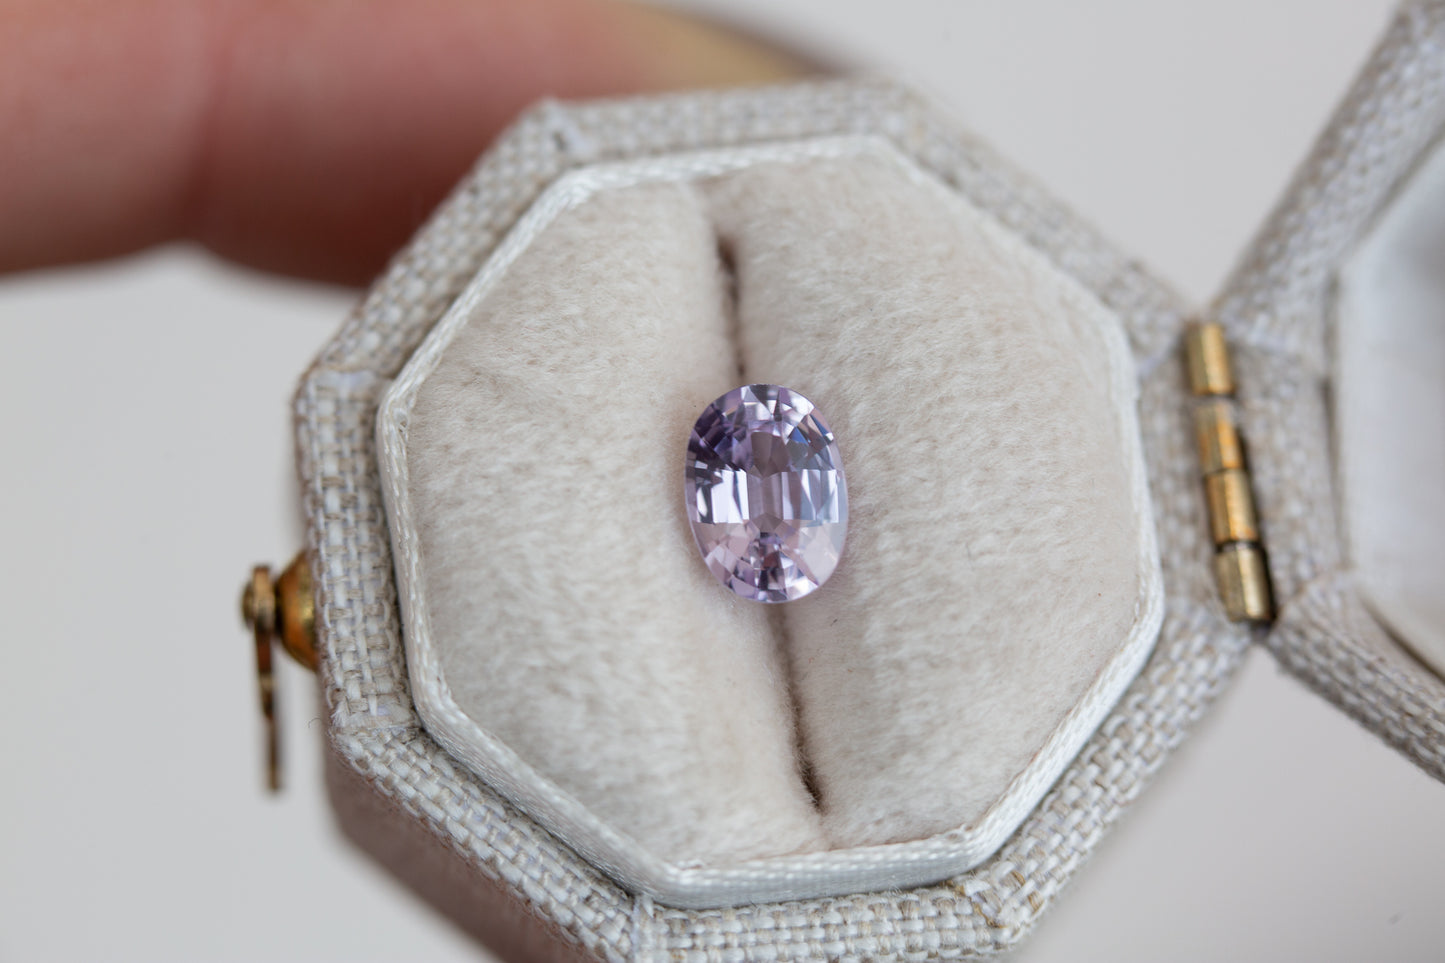 1.03ct light purple/pink oval sapphire